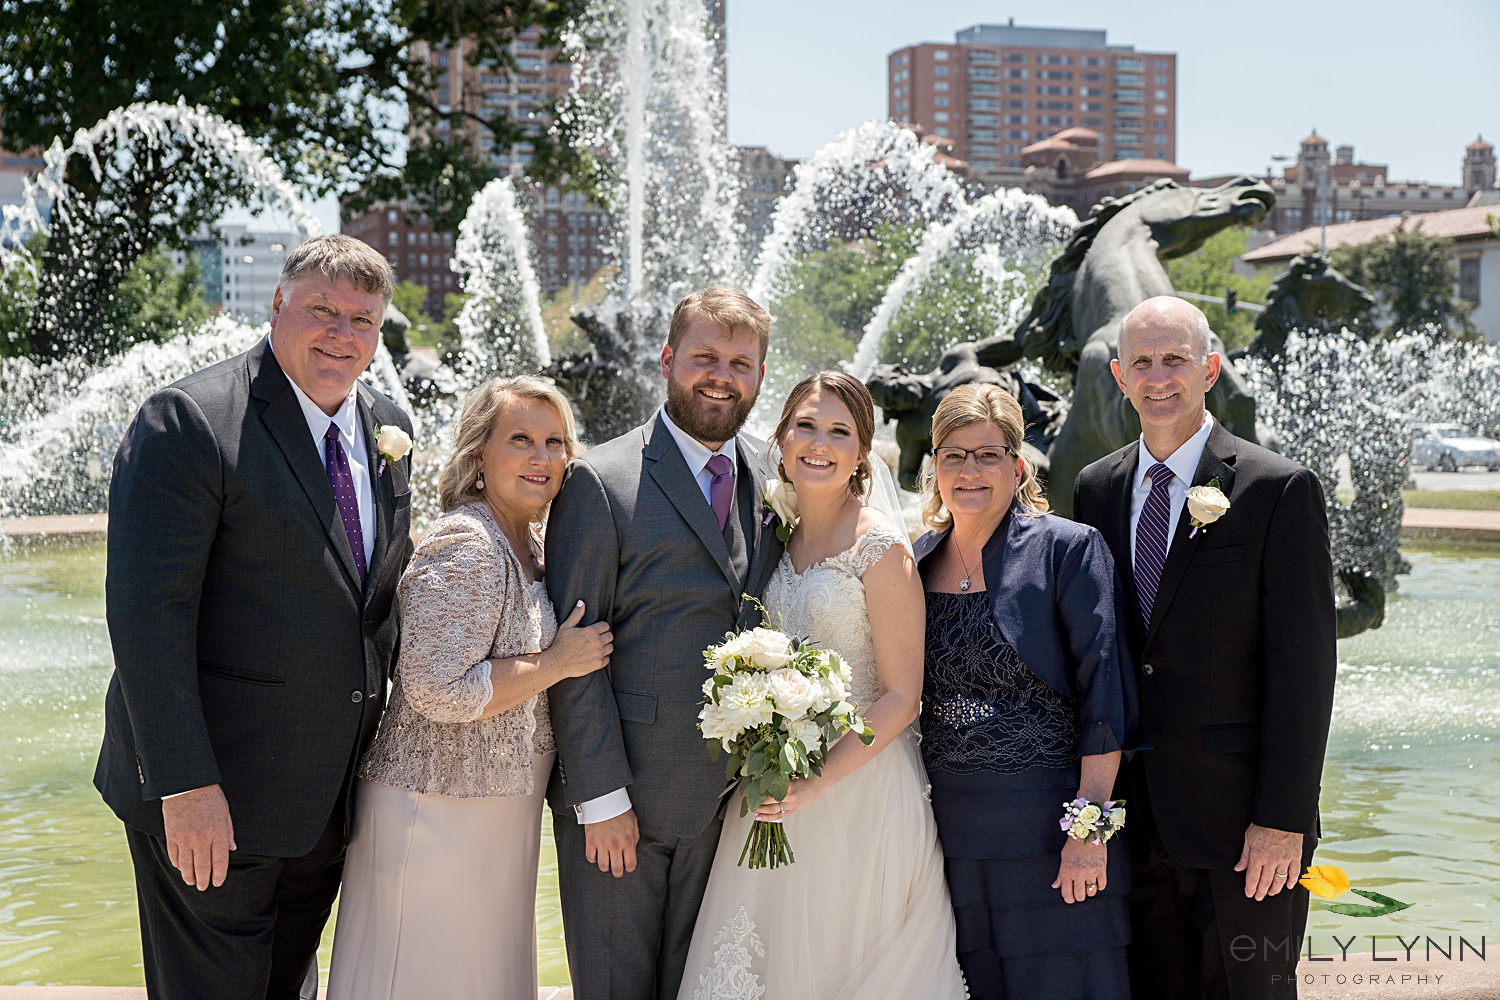 Family-Photos-Plaza-Wedding-Photos-at-the-Fountain-Emily-Lynn-Photography_0071